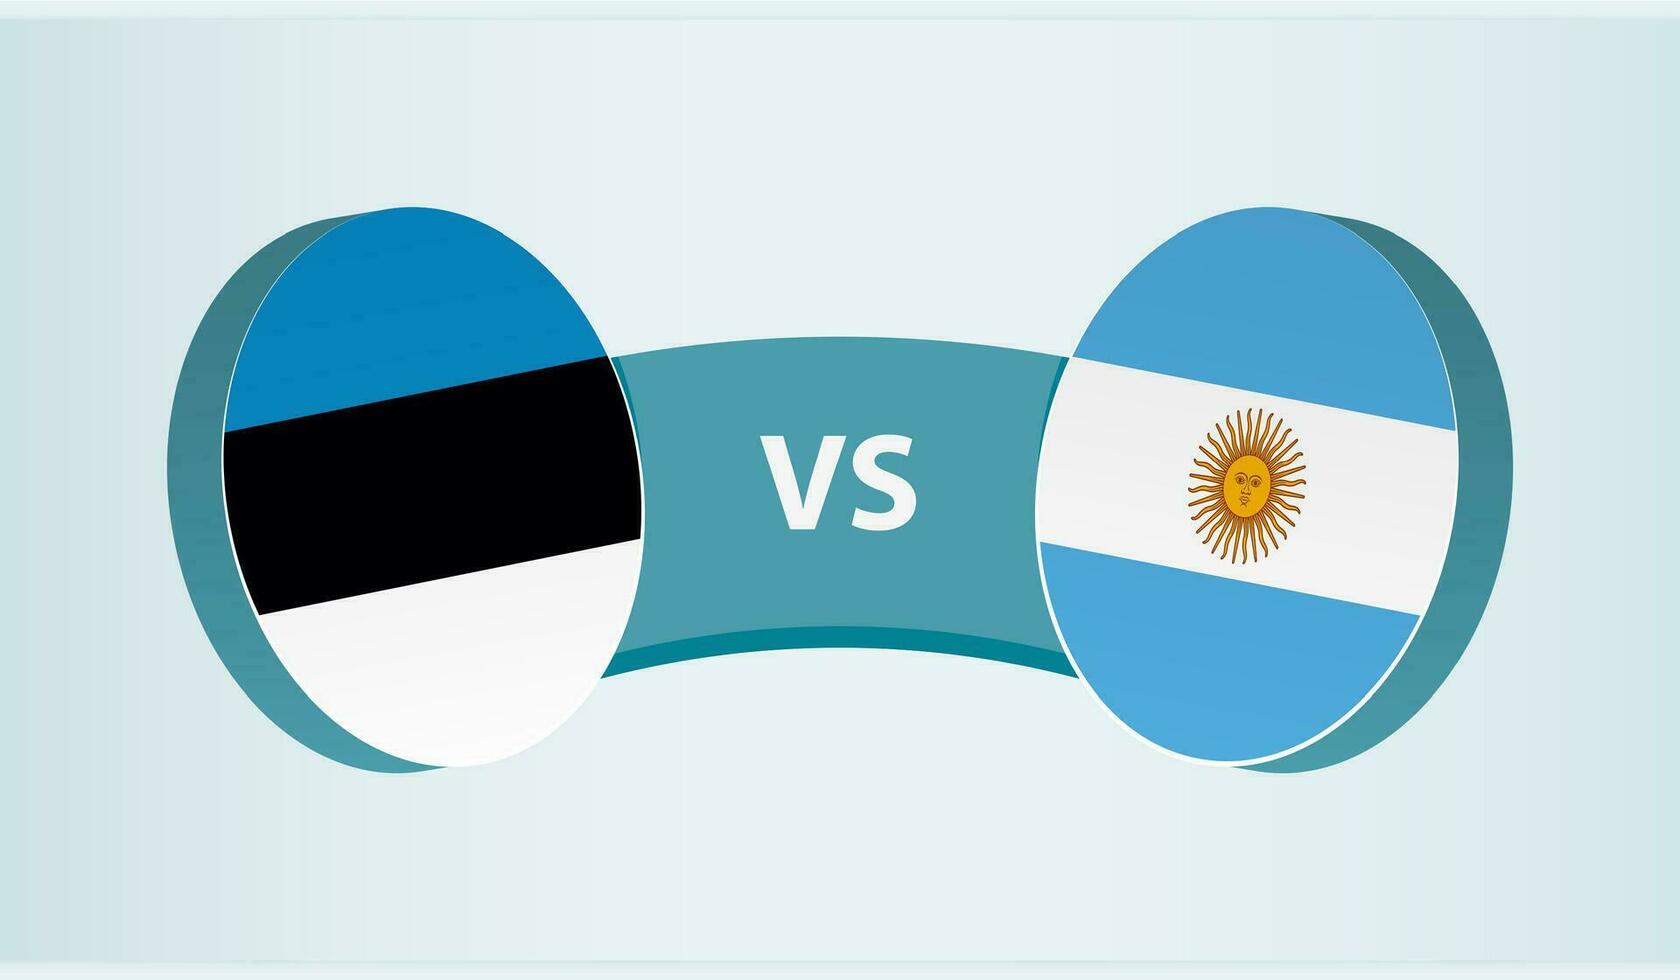 Estônia versus Argentina, equipe Esportes concorrência conceito. vetor